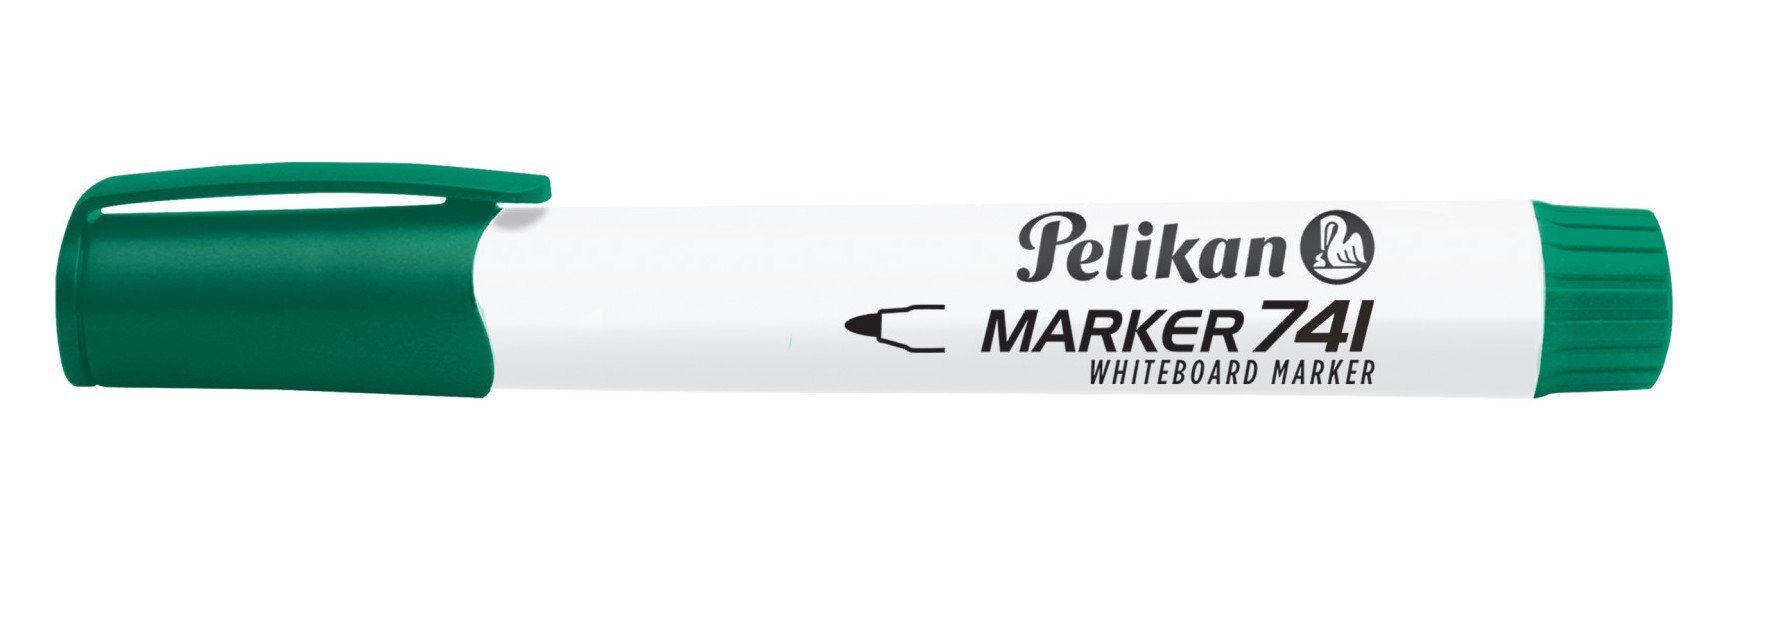 Pelikan Marker grün Marker Pelikan Whiteboard 741